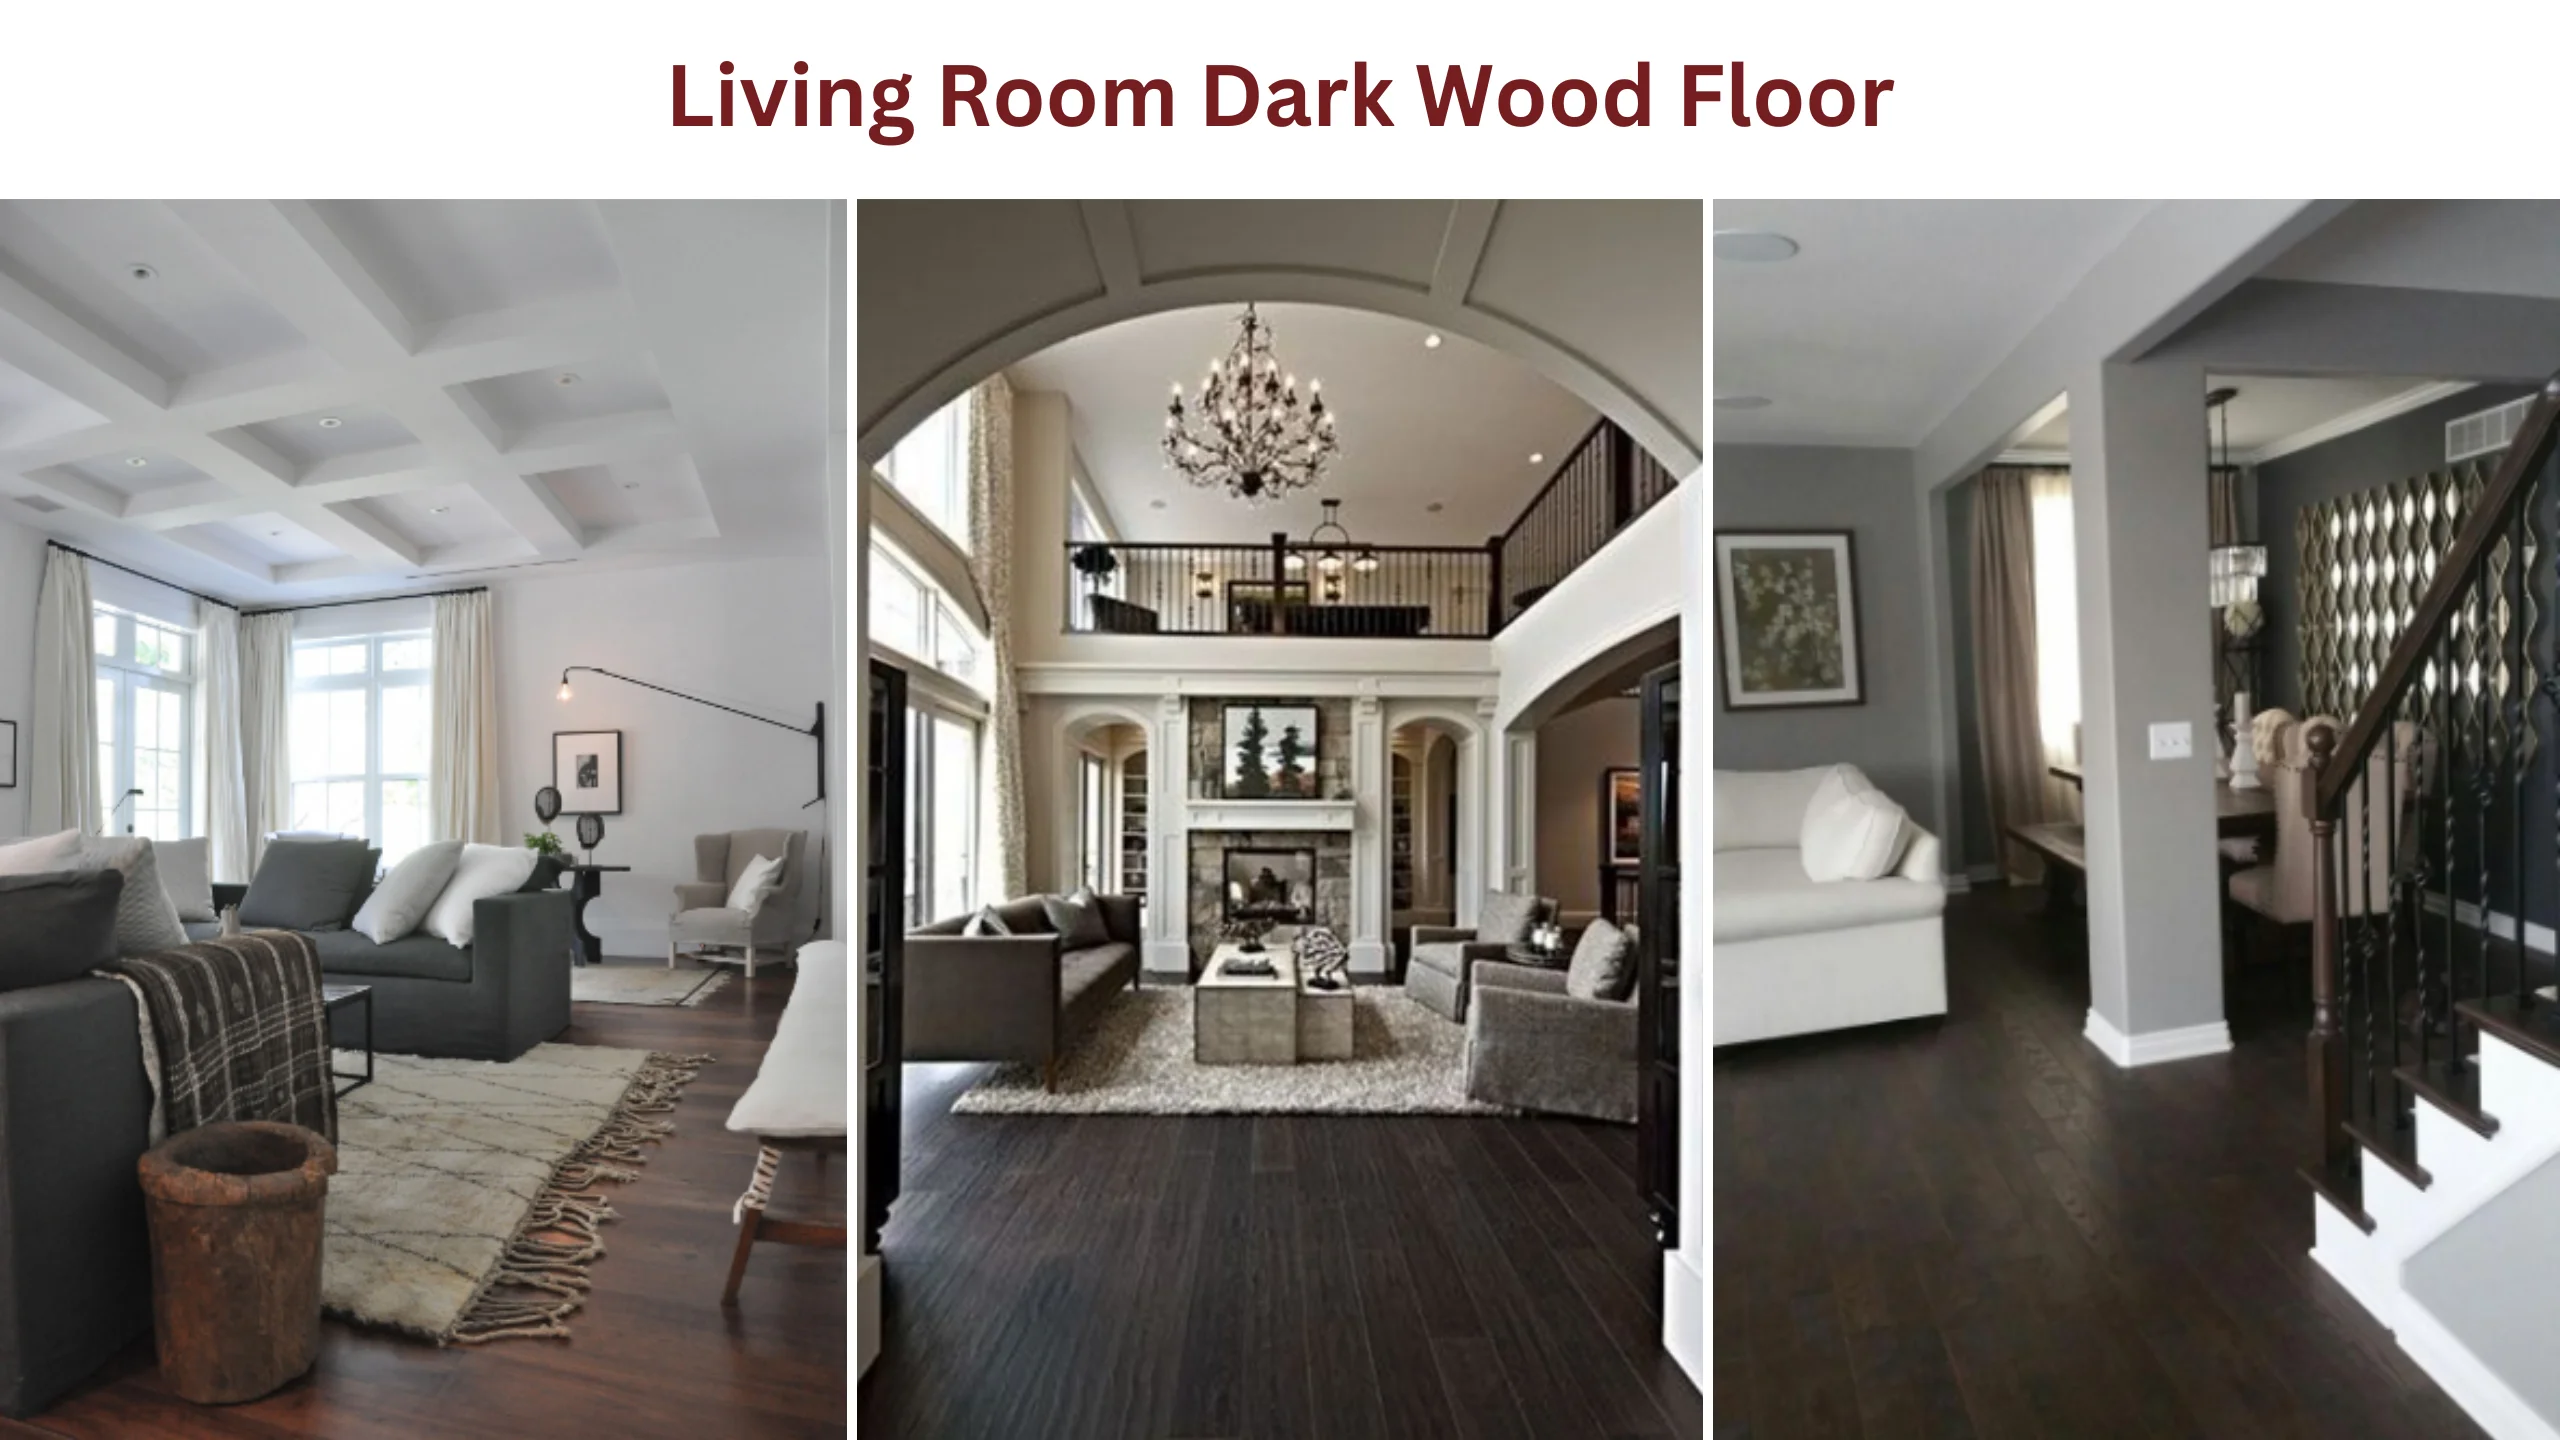 Living room dark wood floor